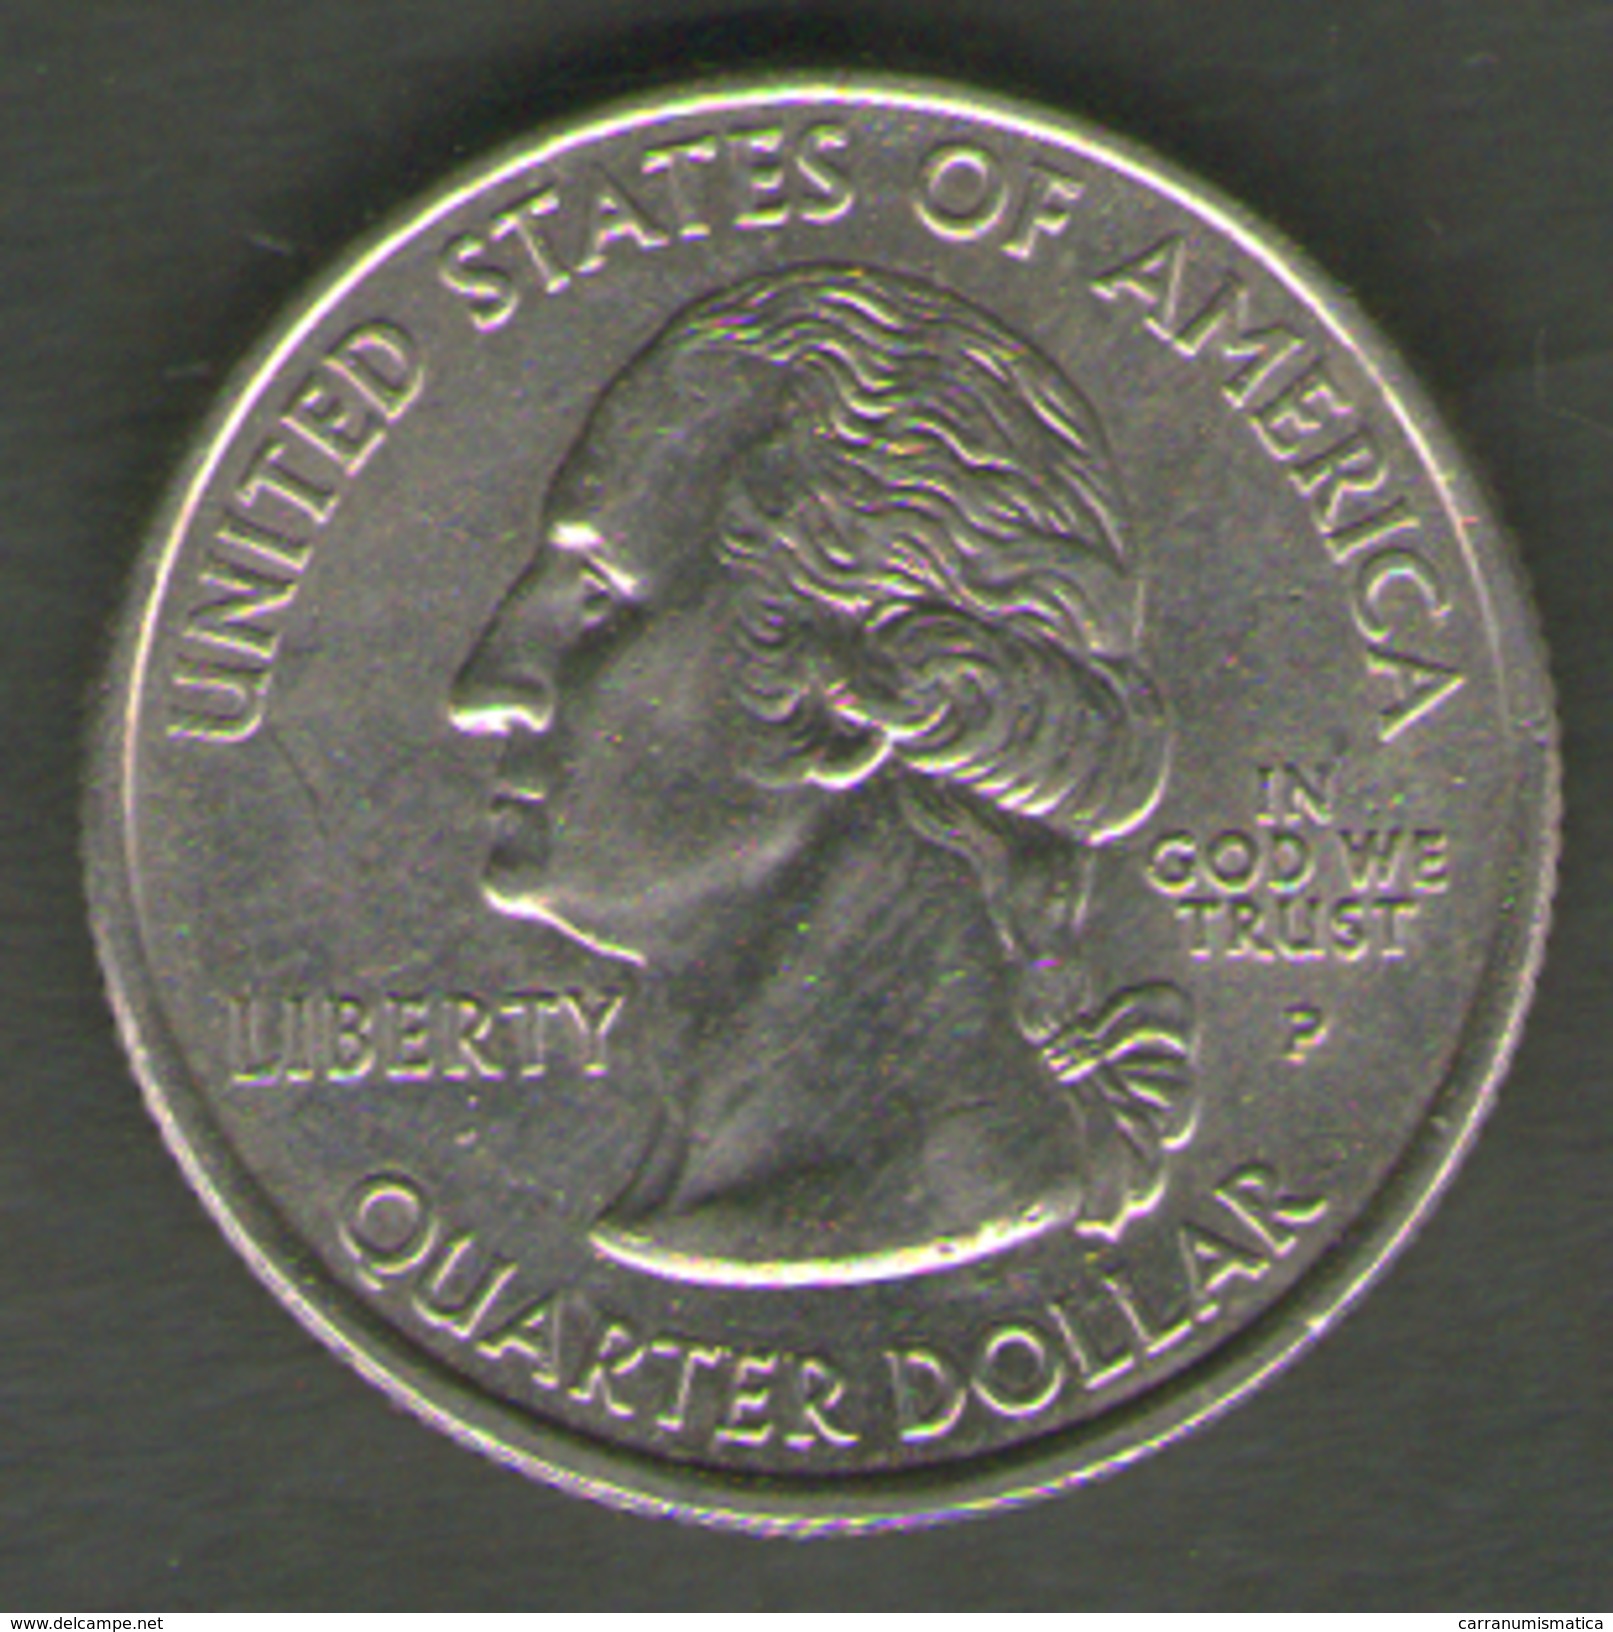 STATI UNITI QUARTER DOLLAR 2008 ALASKA - 1999-2009: State Quarters